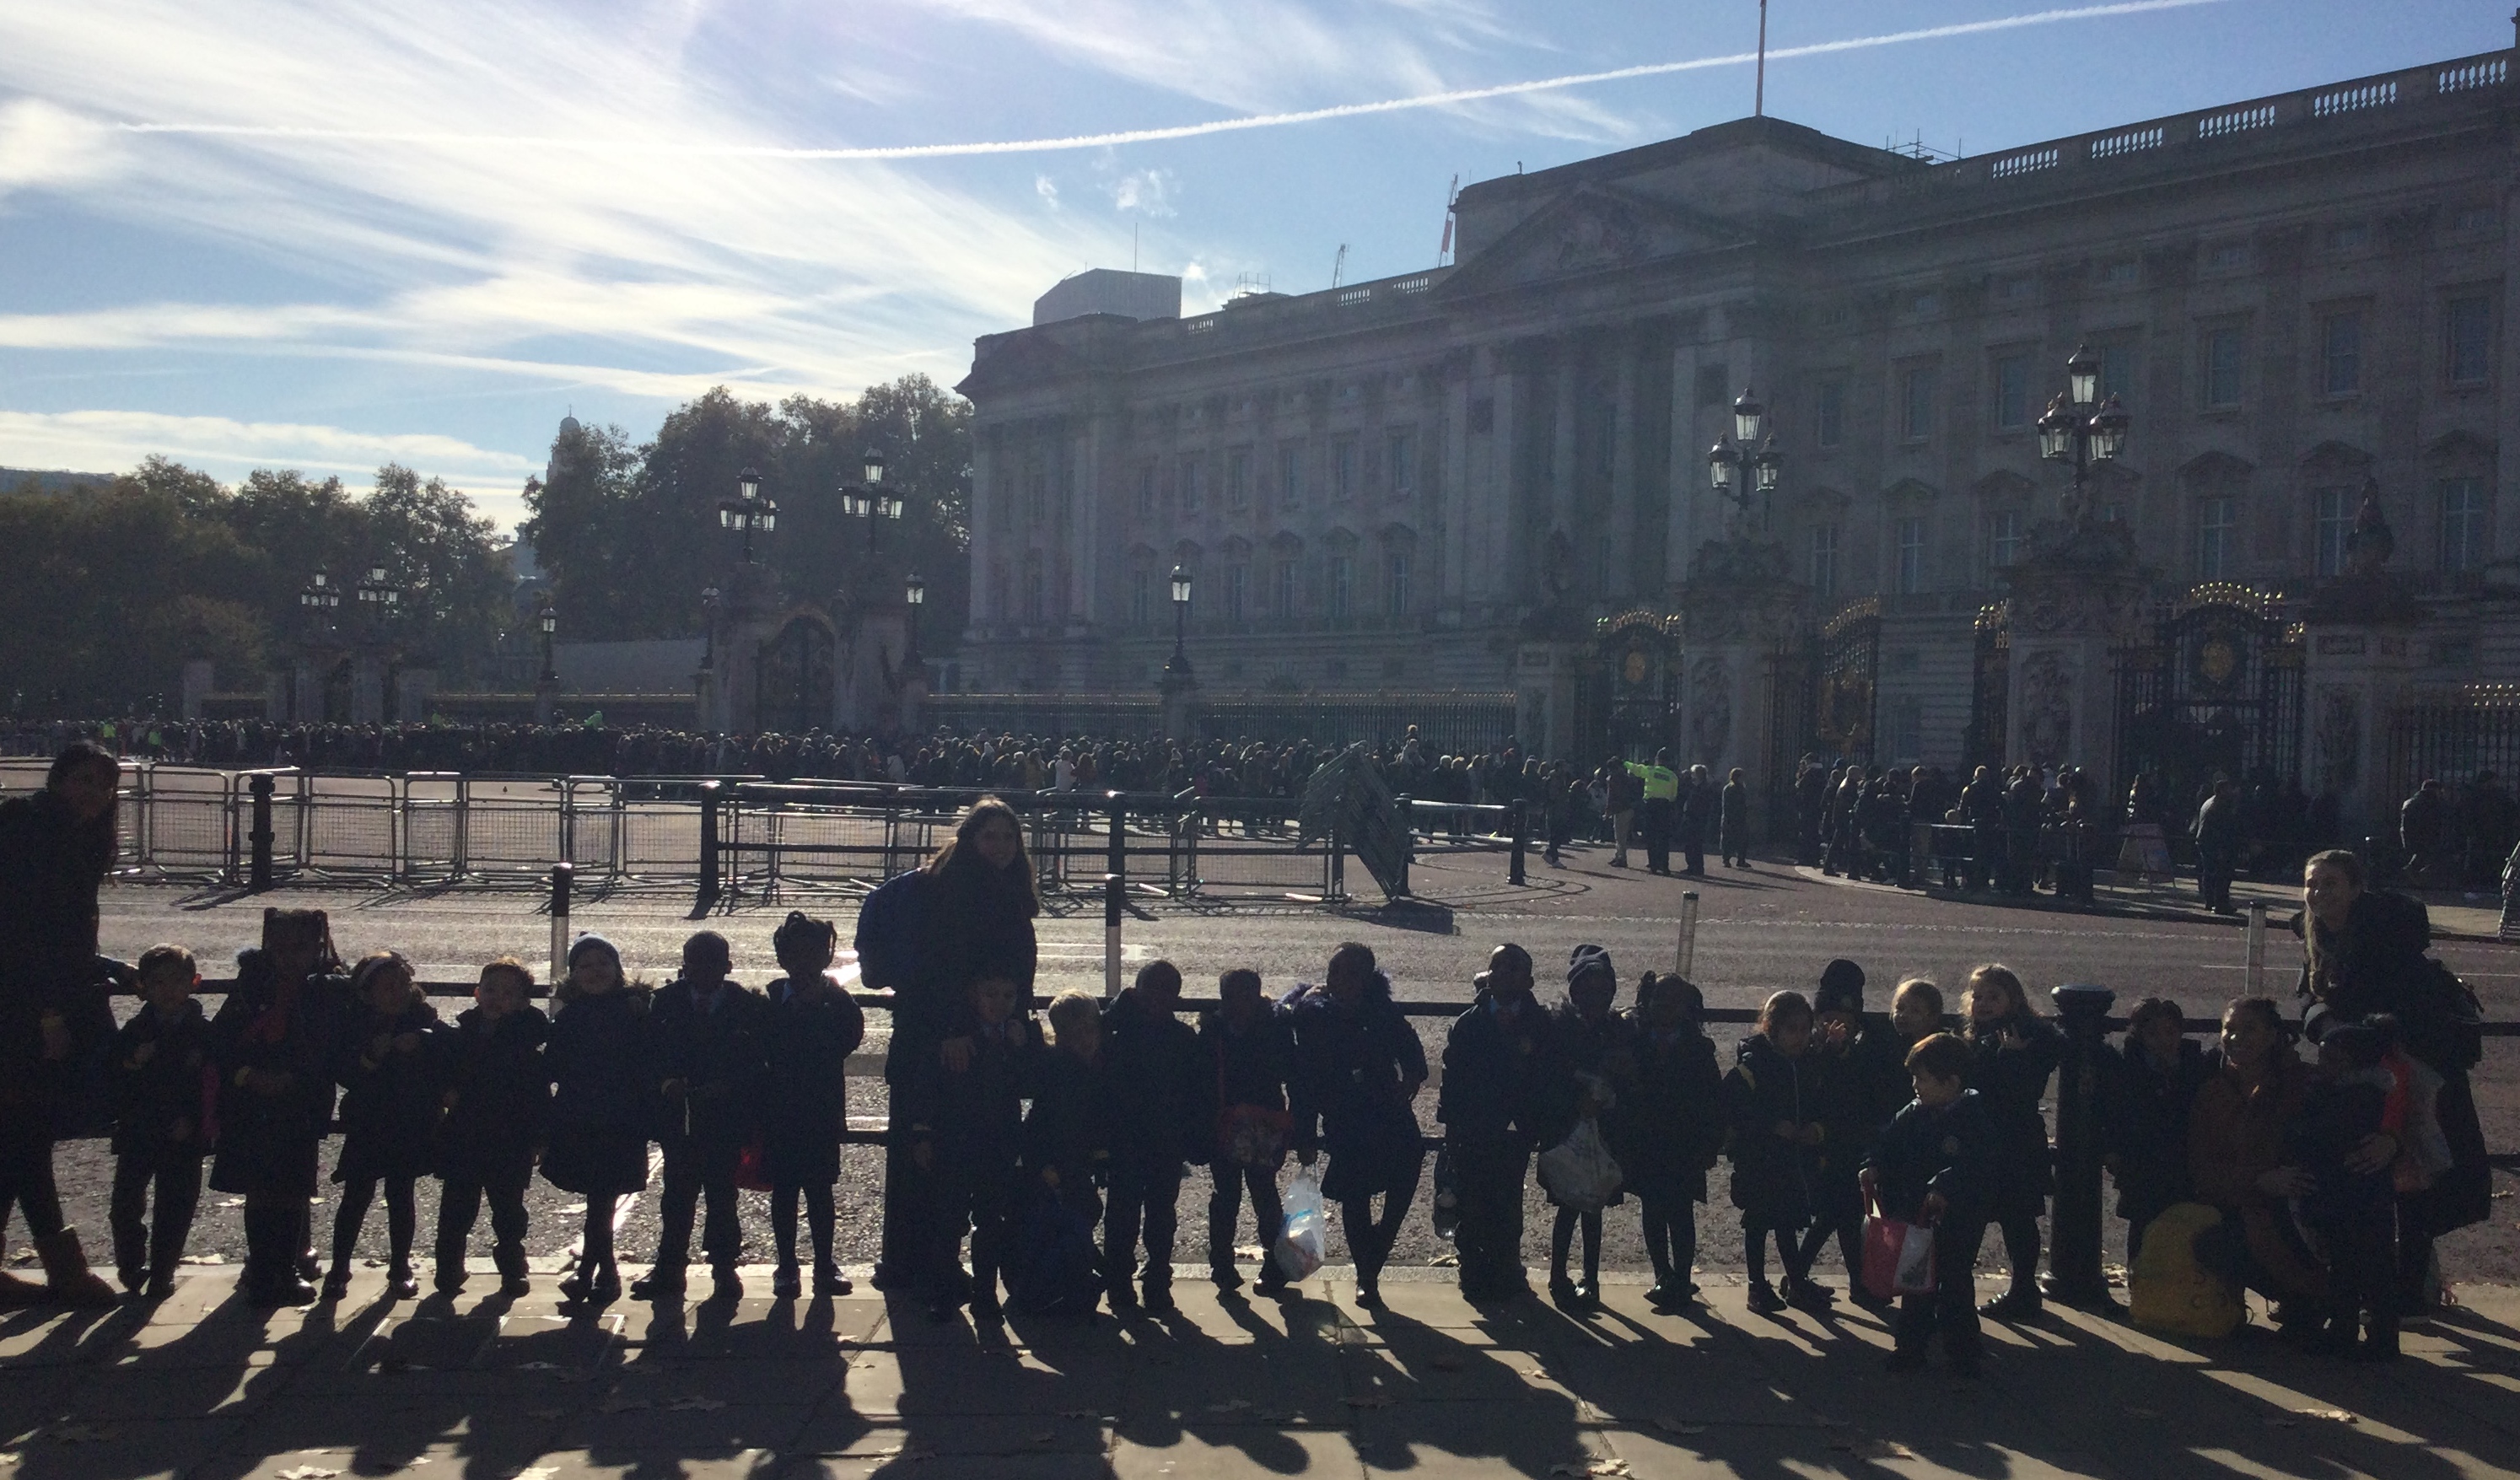 Reception classes visit Buckingham Palace